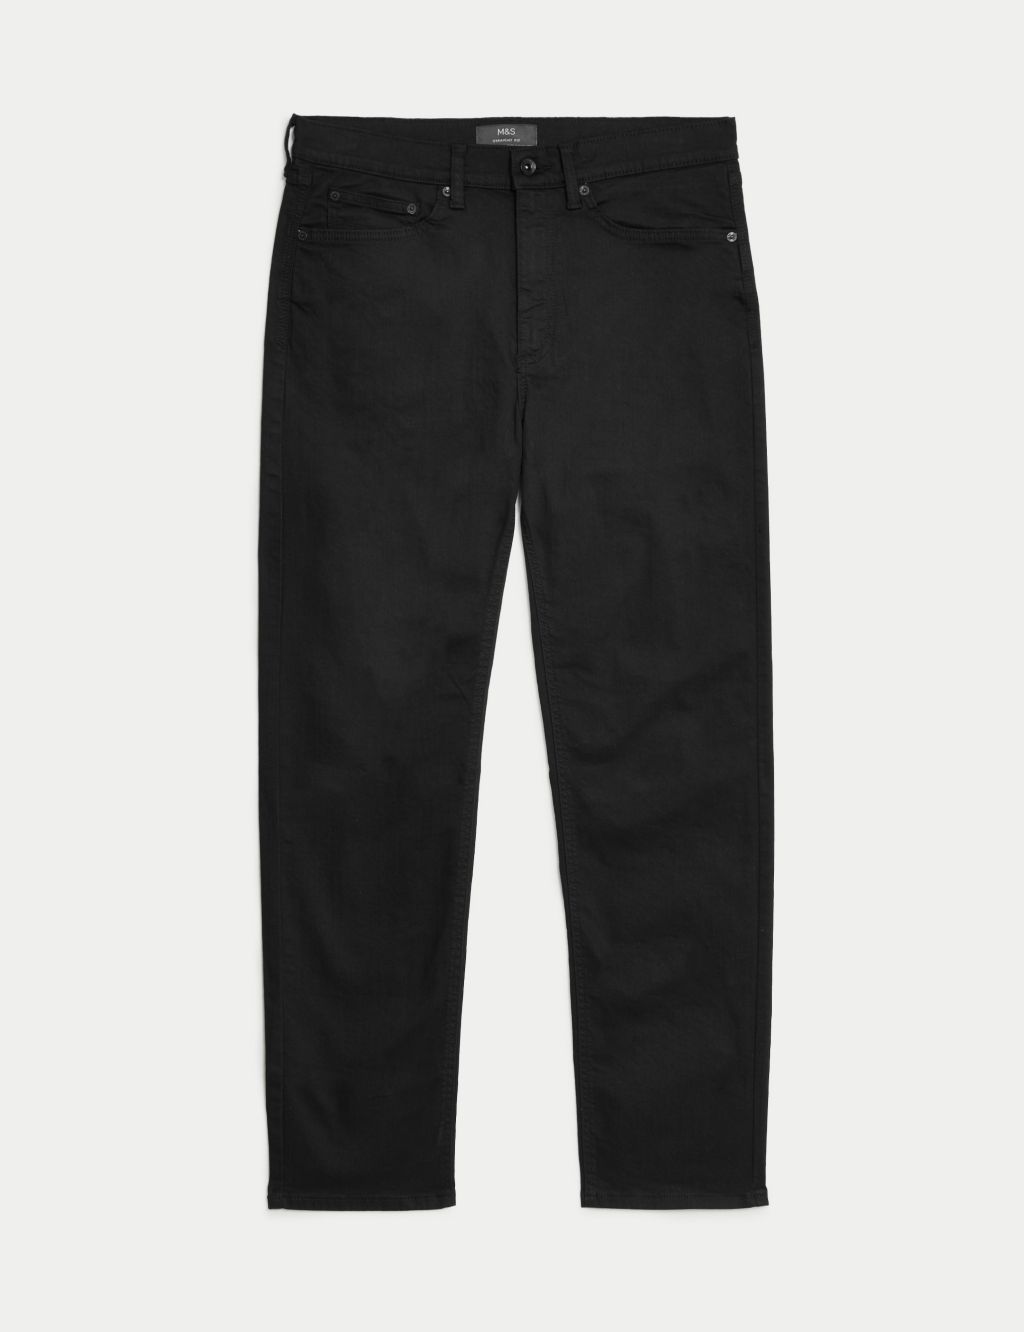 Straight Fit 360 Flex™ Jeans | M&S Collection | M&S